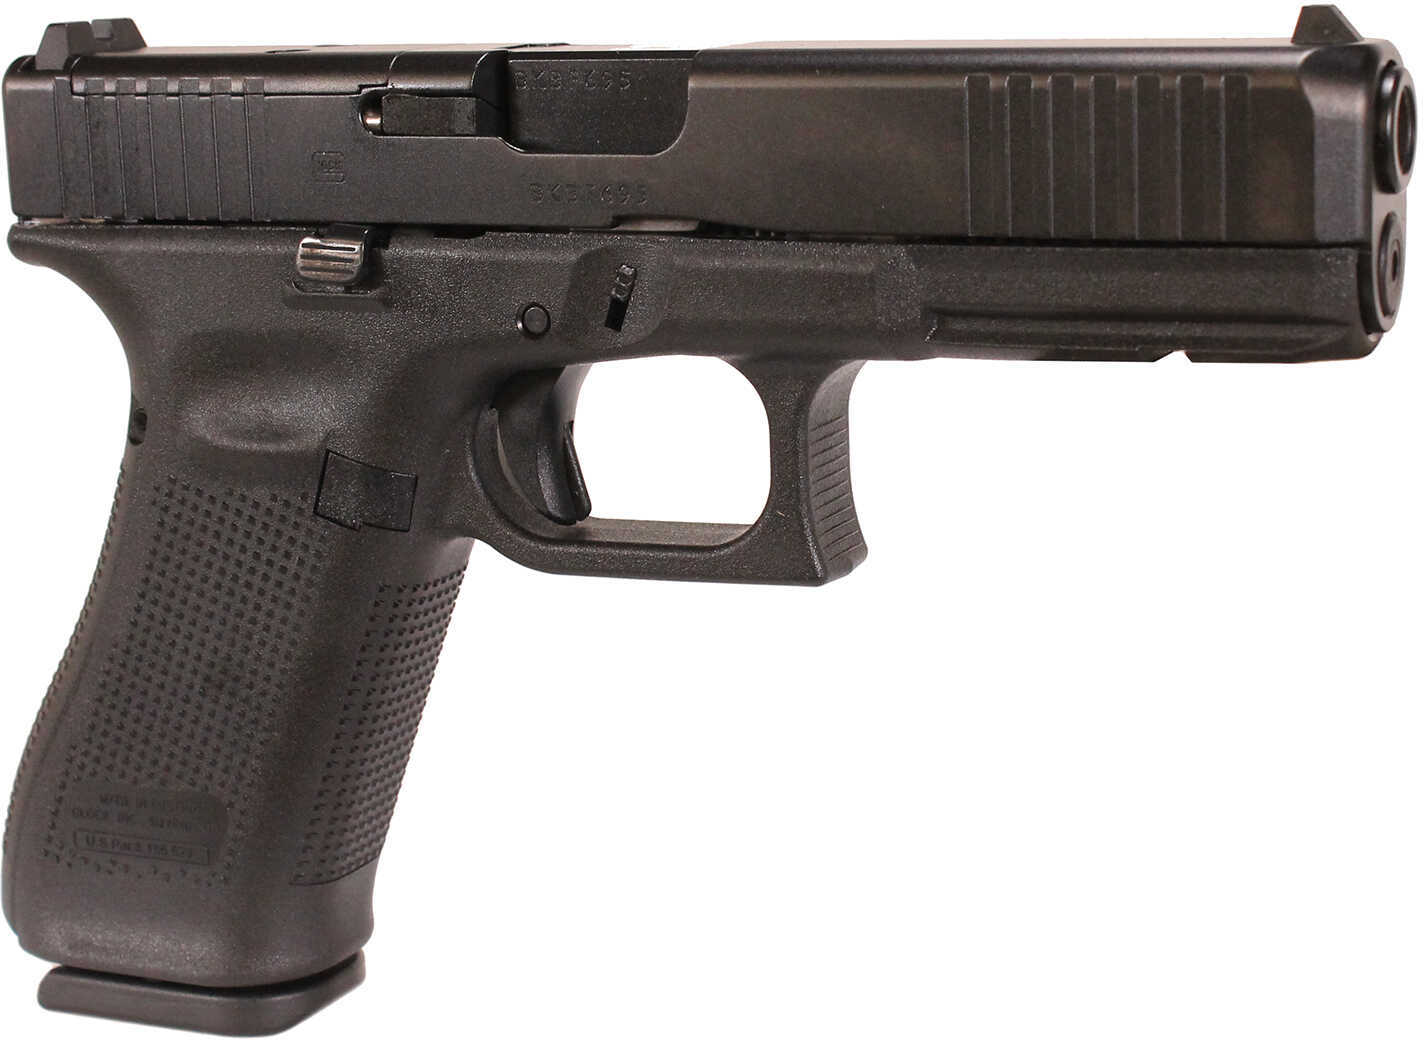 Glock G17 Gen 5 MOS 9mm Luger 4.49" Barrel 17 Round Capacity Black Polymer Grip/Frame